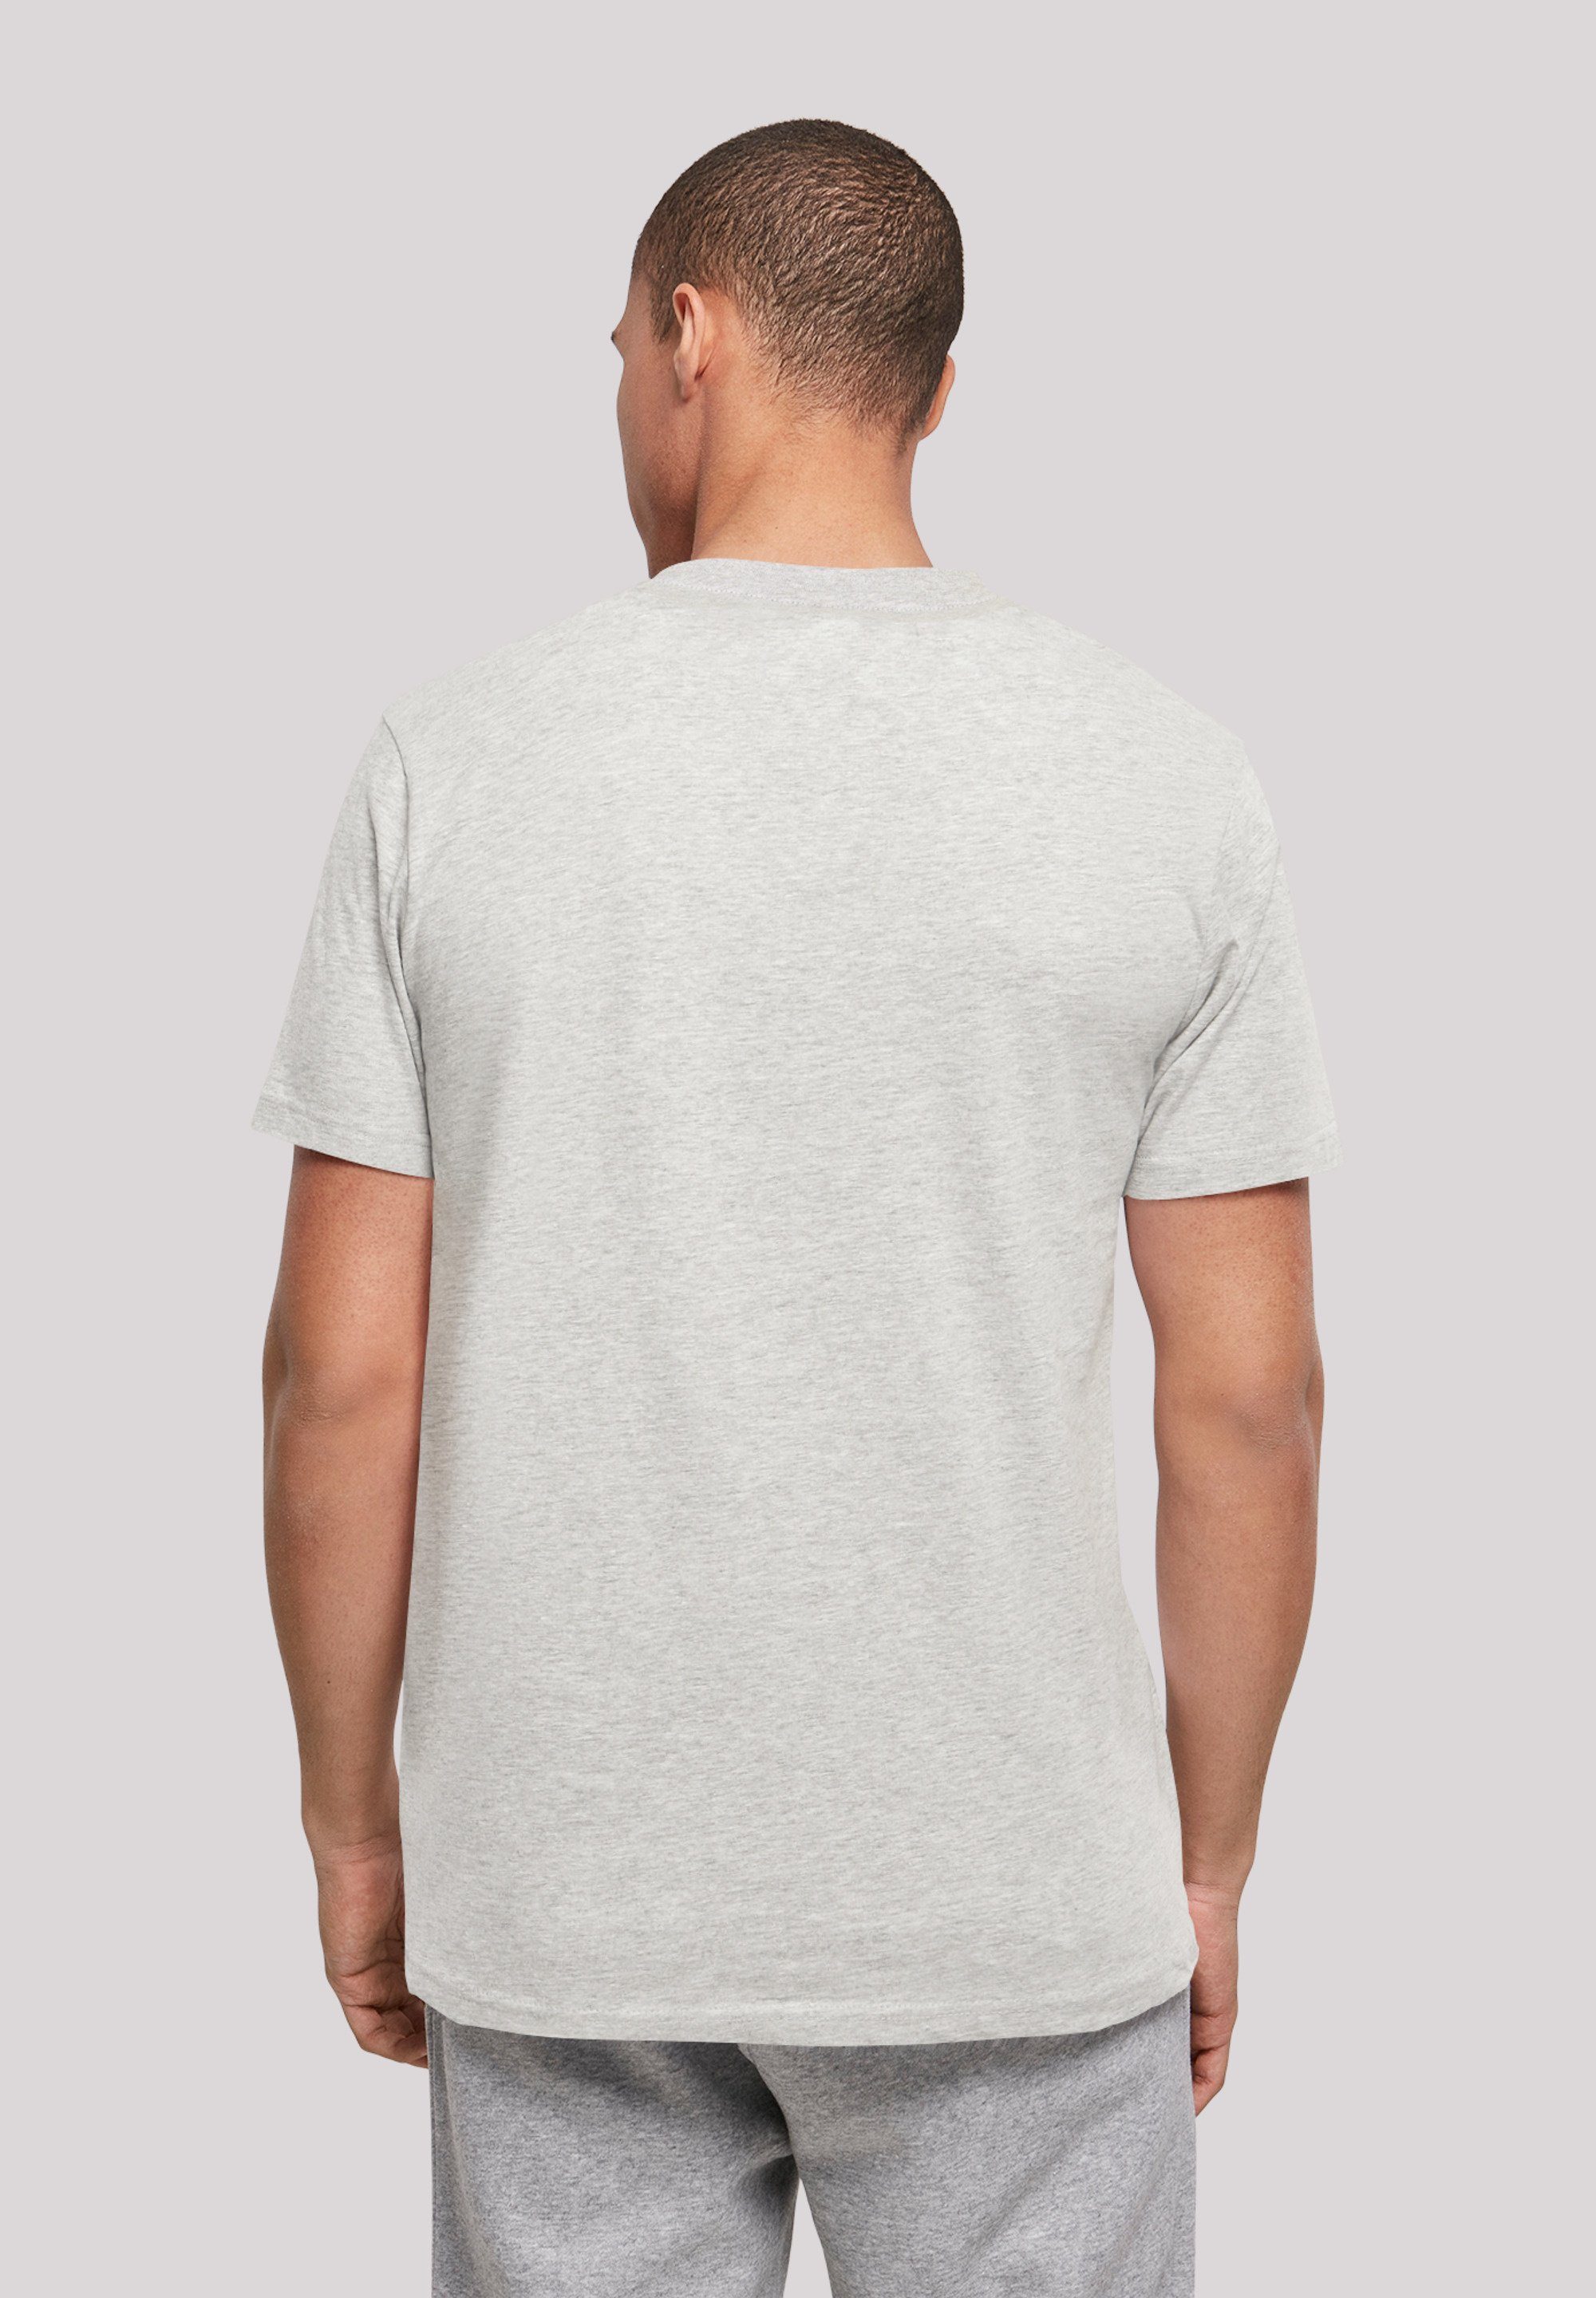 grey F4NT4STIC Rainbow TEE Turtle heather UNISEX Print T-Shirt